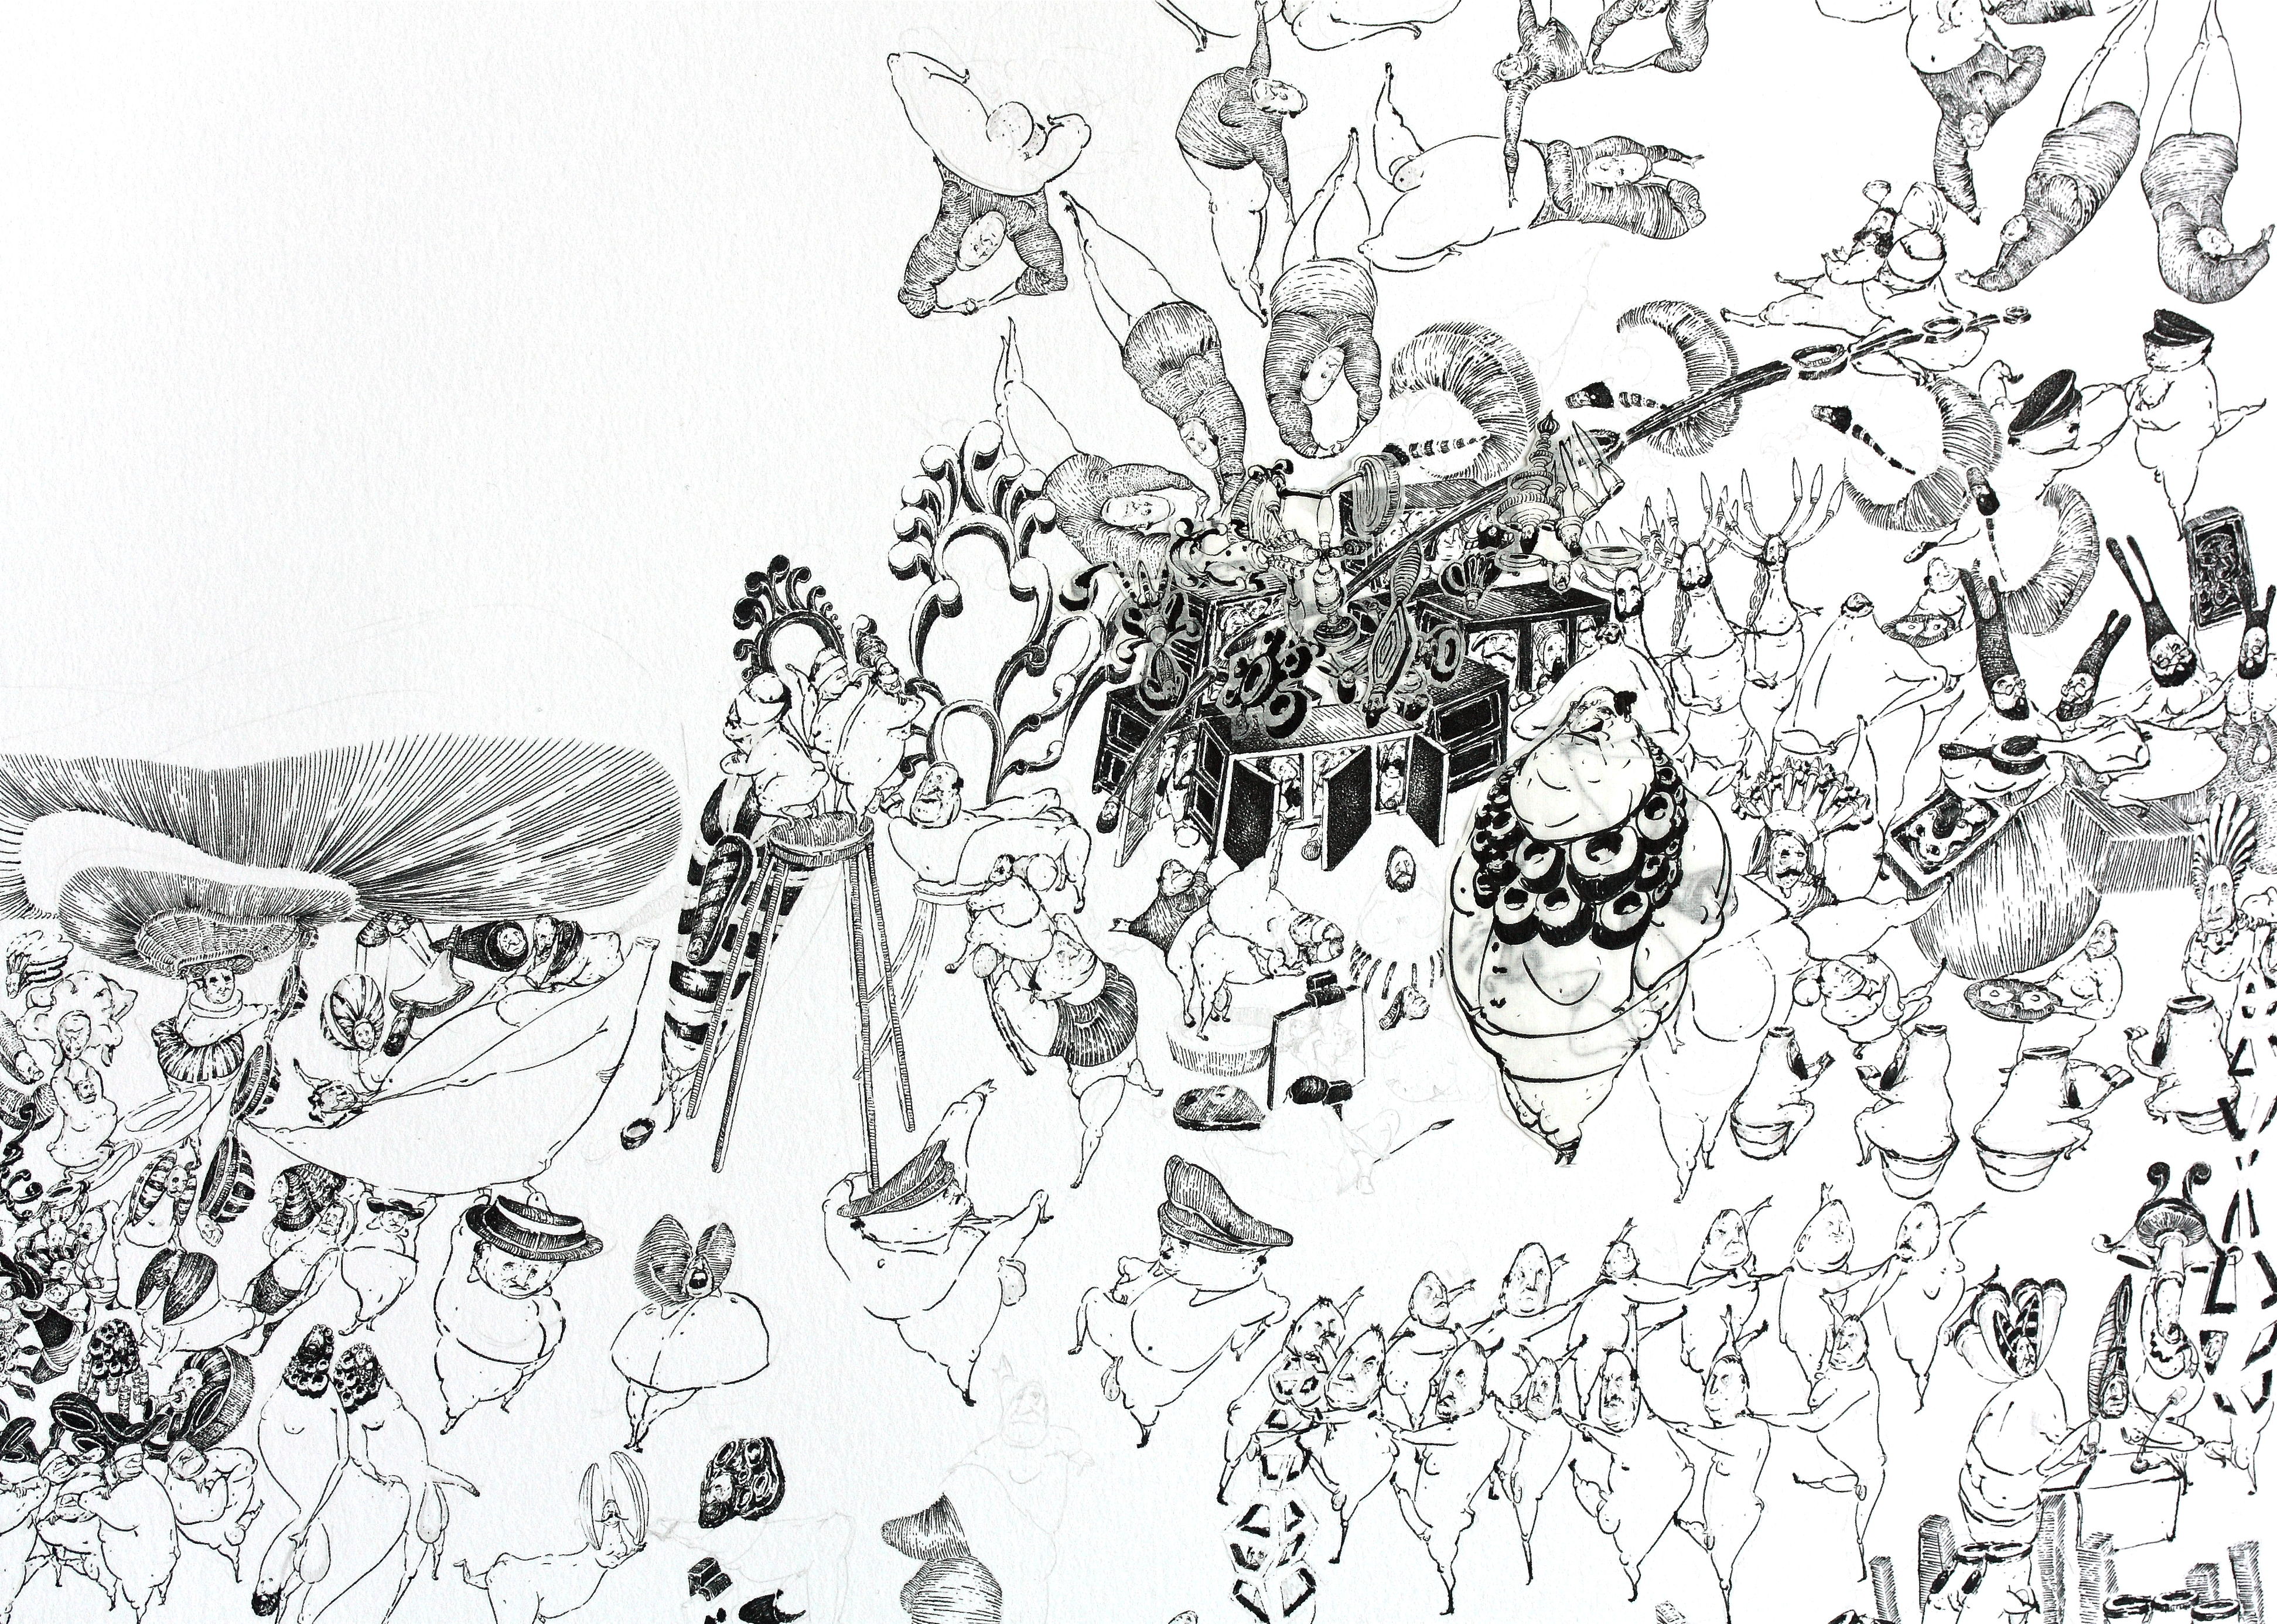 Ricardo Lanzarini, Desplazamiento social con coreografia, 2013-2019. Drawing, pencil on paper and collage, 48 x 58 cm. Courtesy the artist and Baronian Xippas, Brussels